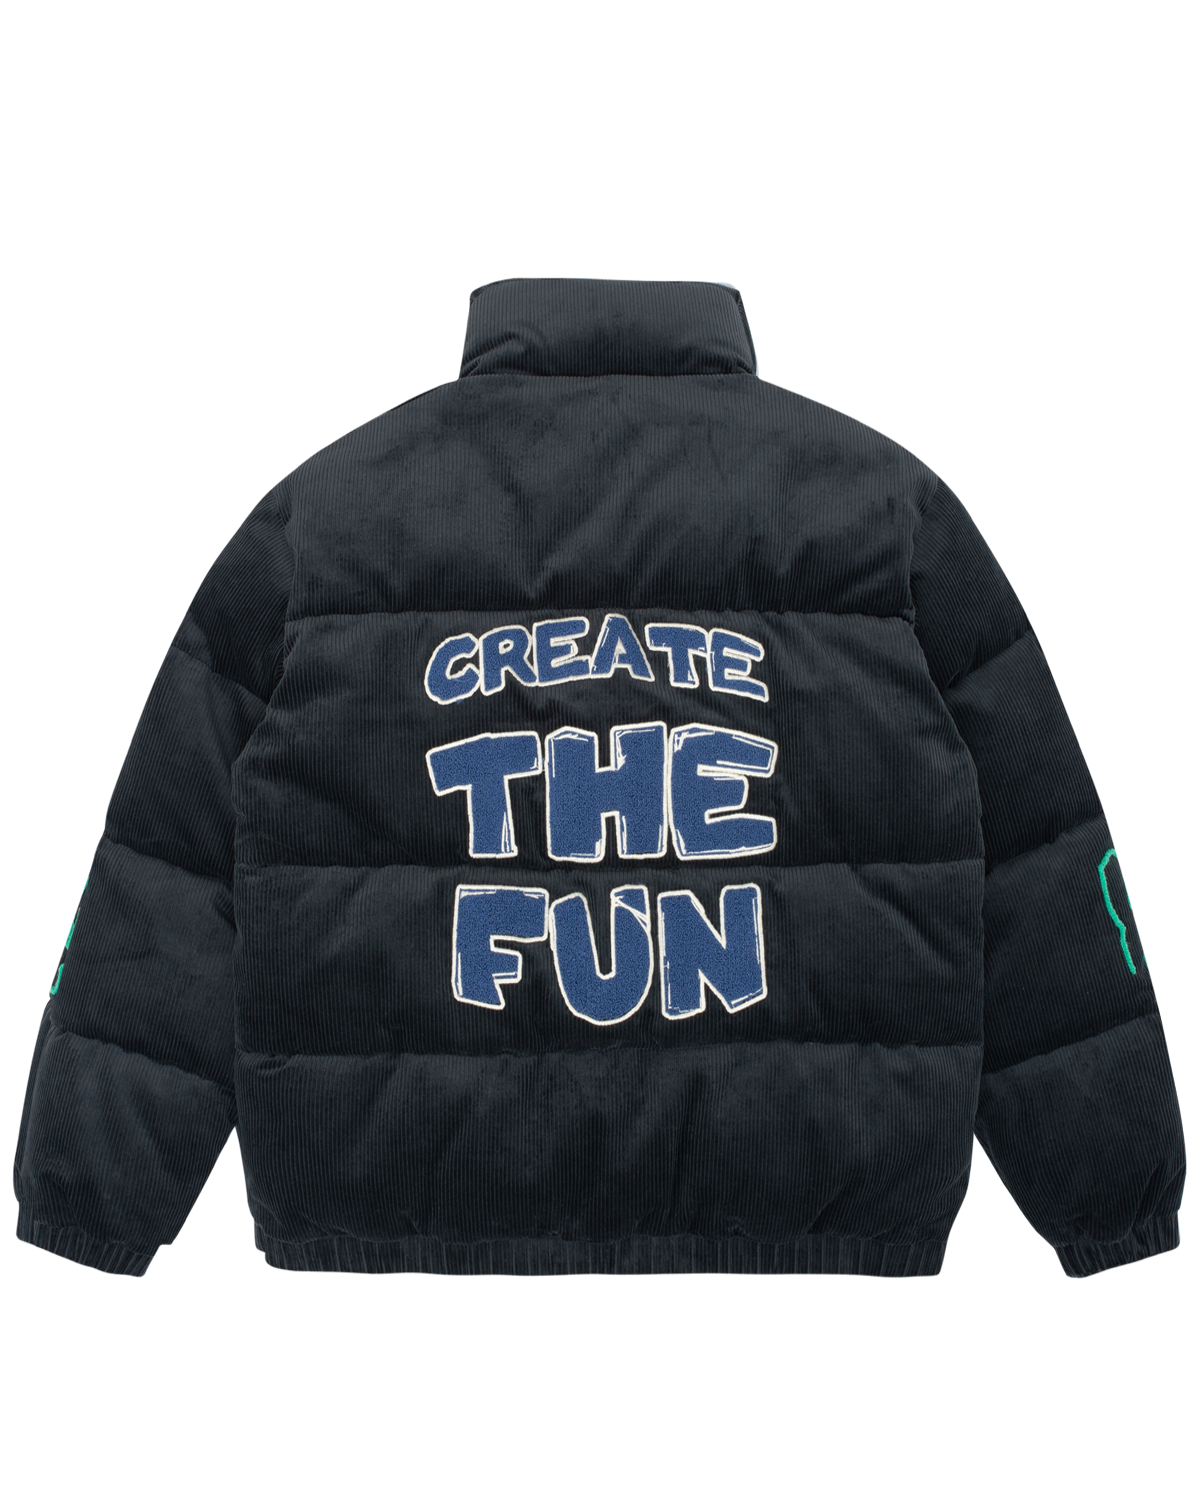 TAKA Original corduroy puffer jacket black